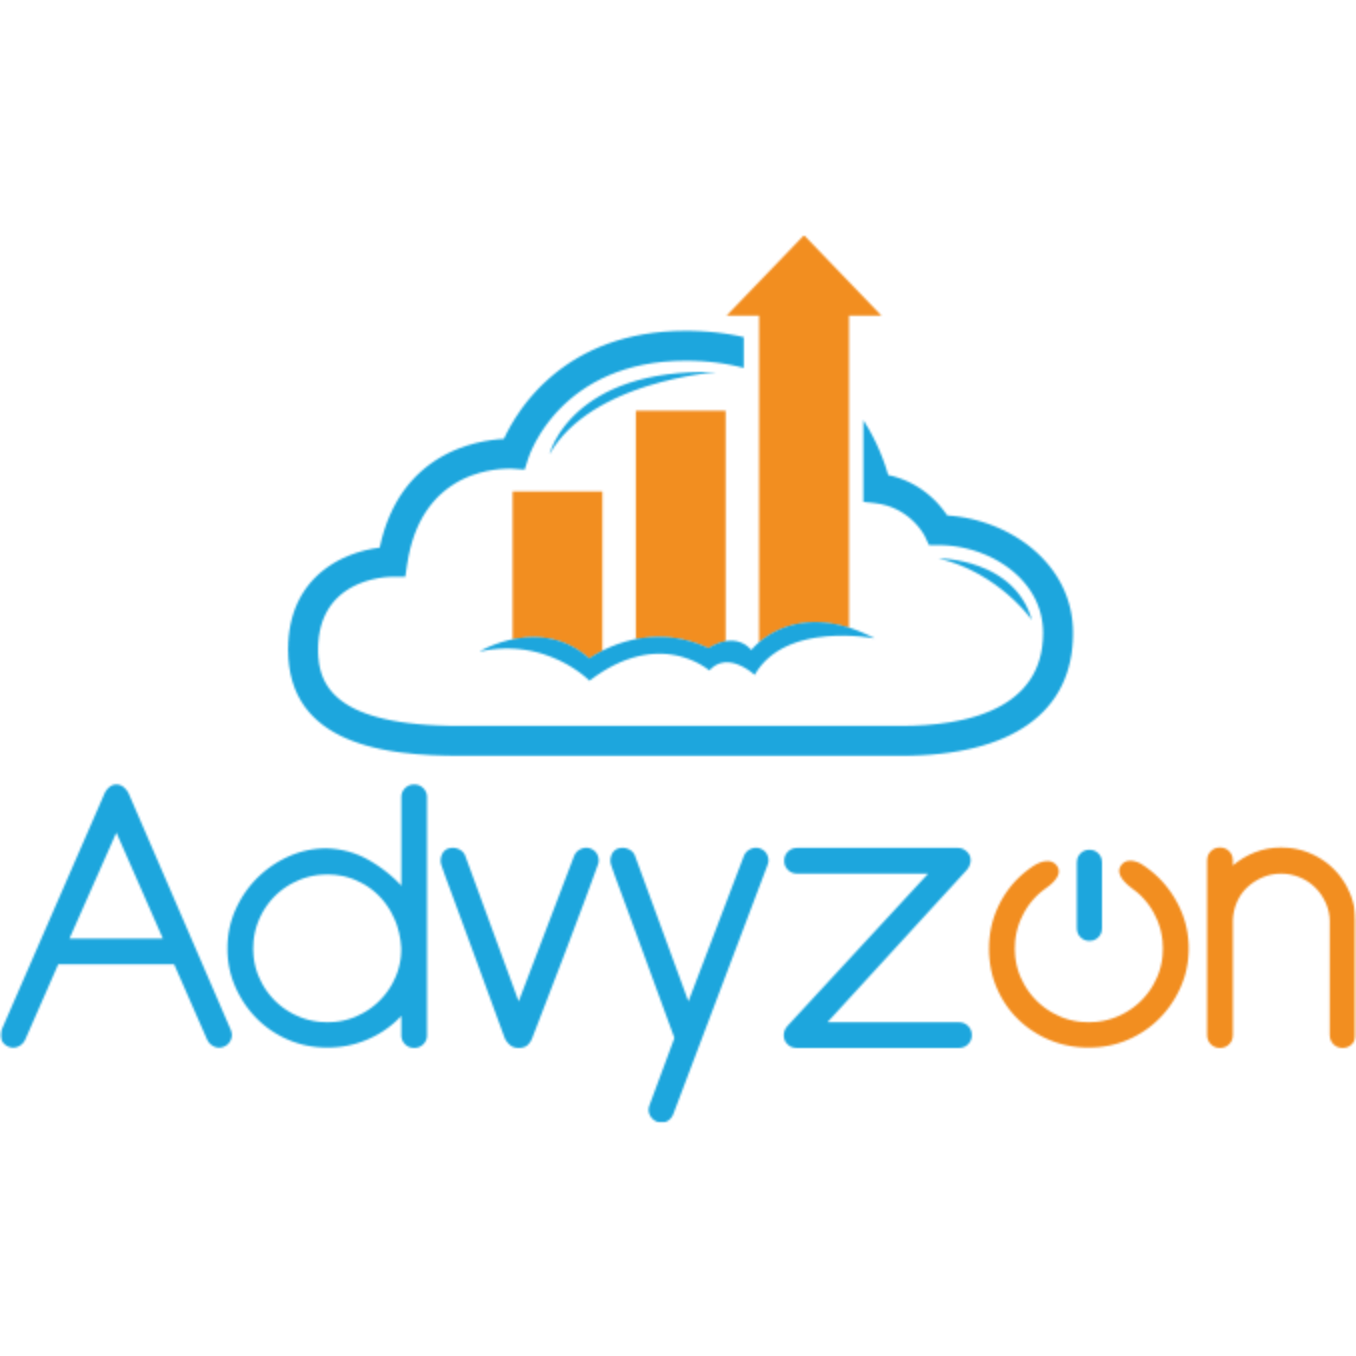 Advyzon Logo